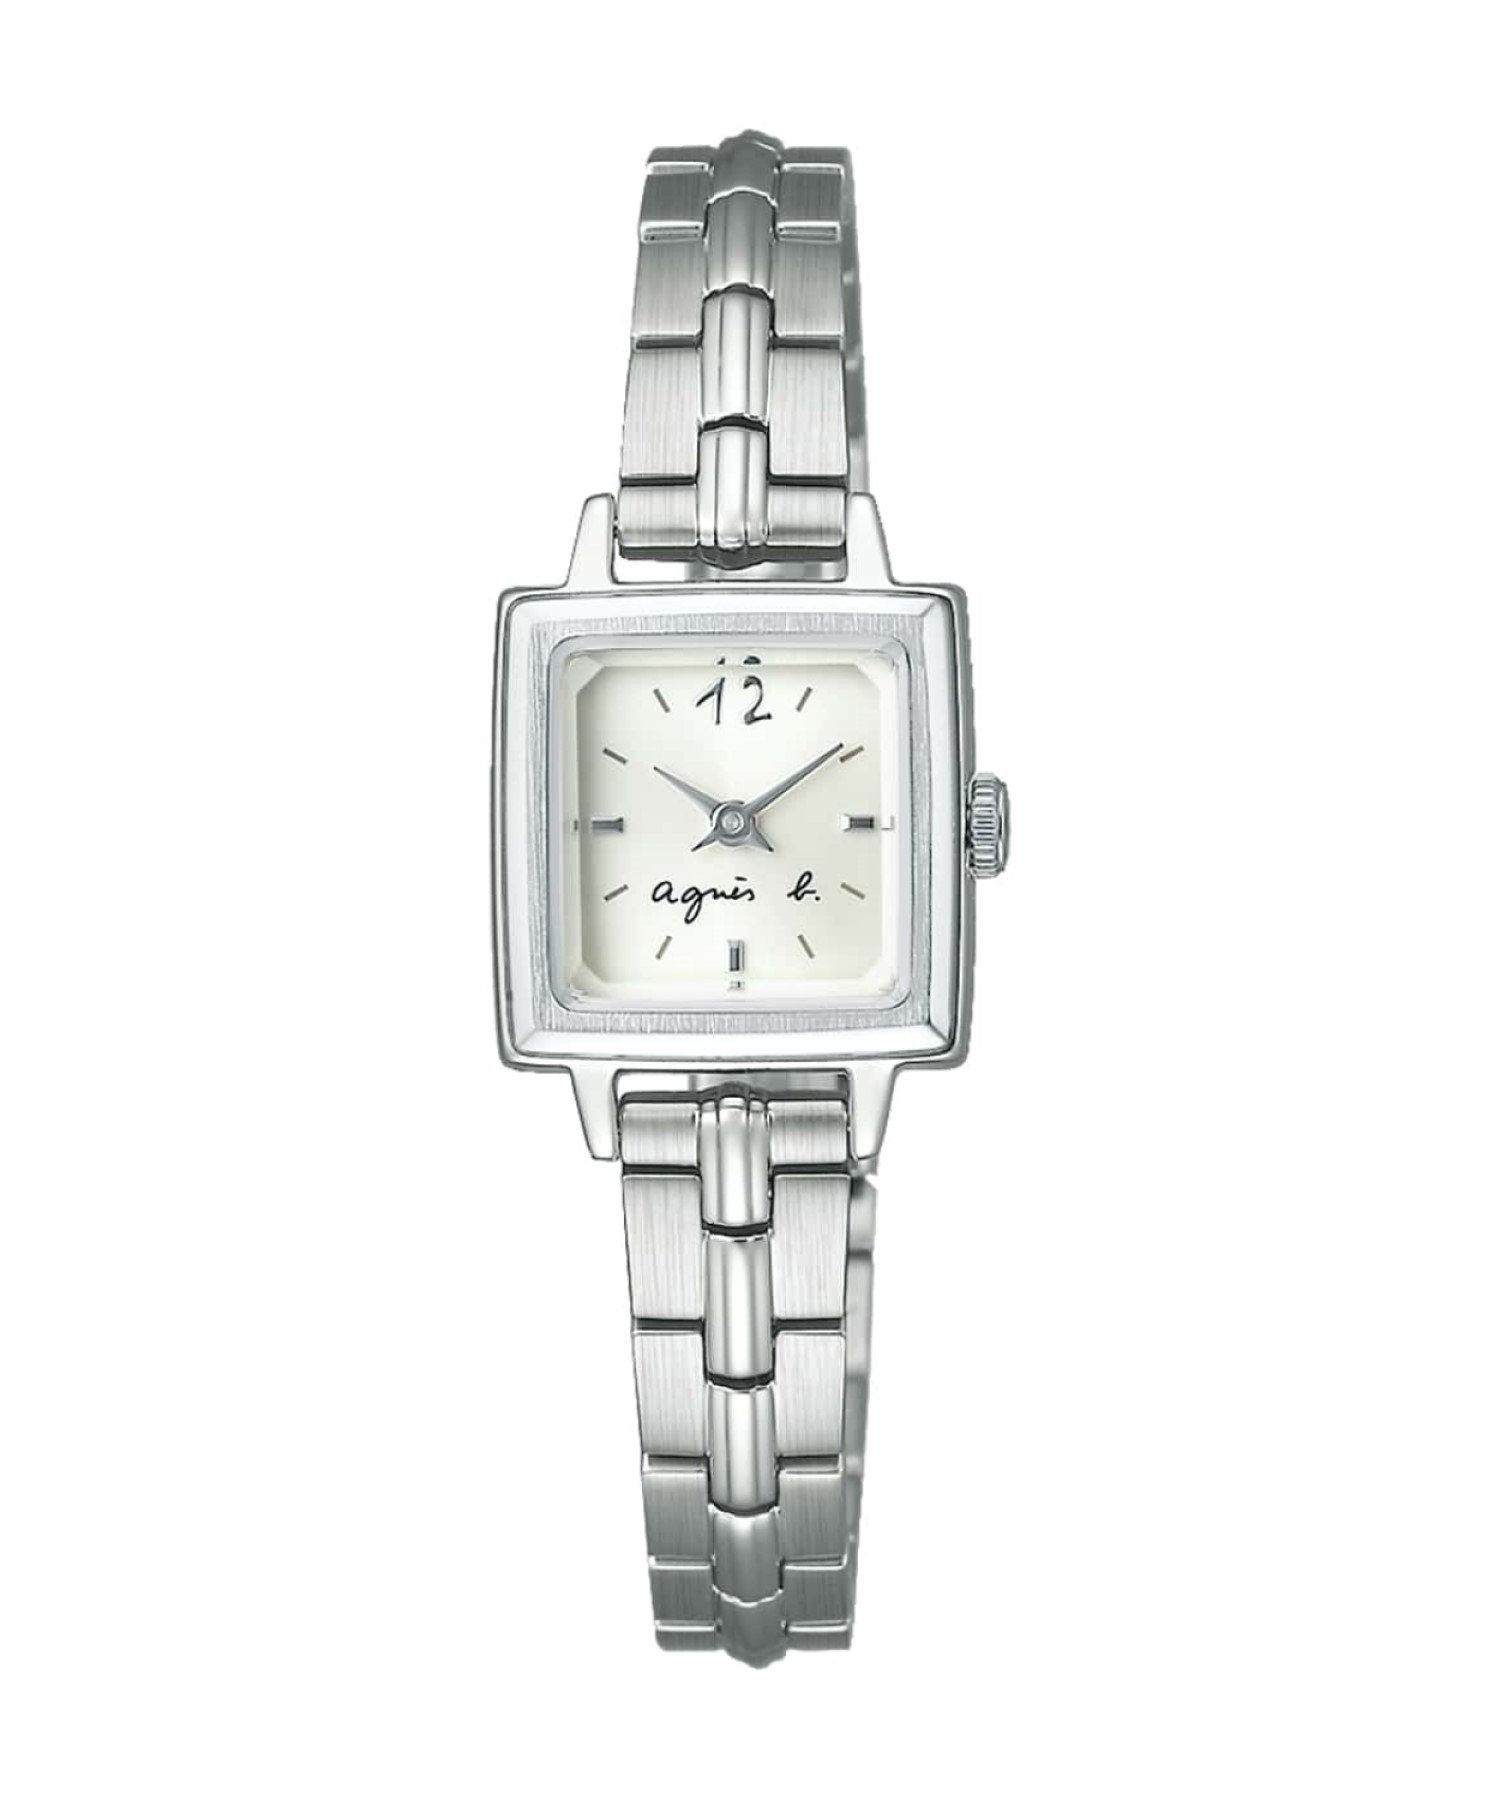 agnes b. FEMME LM01 WATCH FCSK749 時計 ミニスクエア 限定モデル アニエスベー アクセサリー・腕時計 腕時計 ホワイト【送料無料】